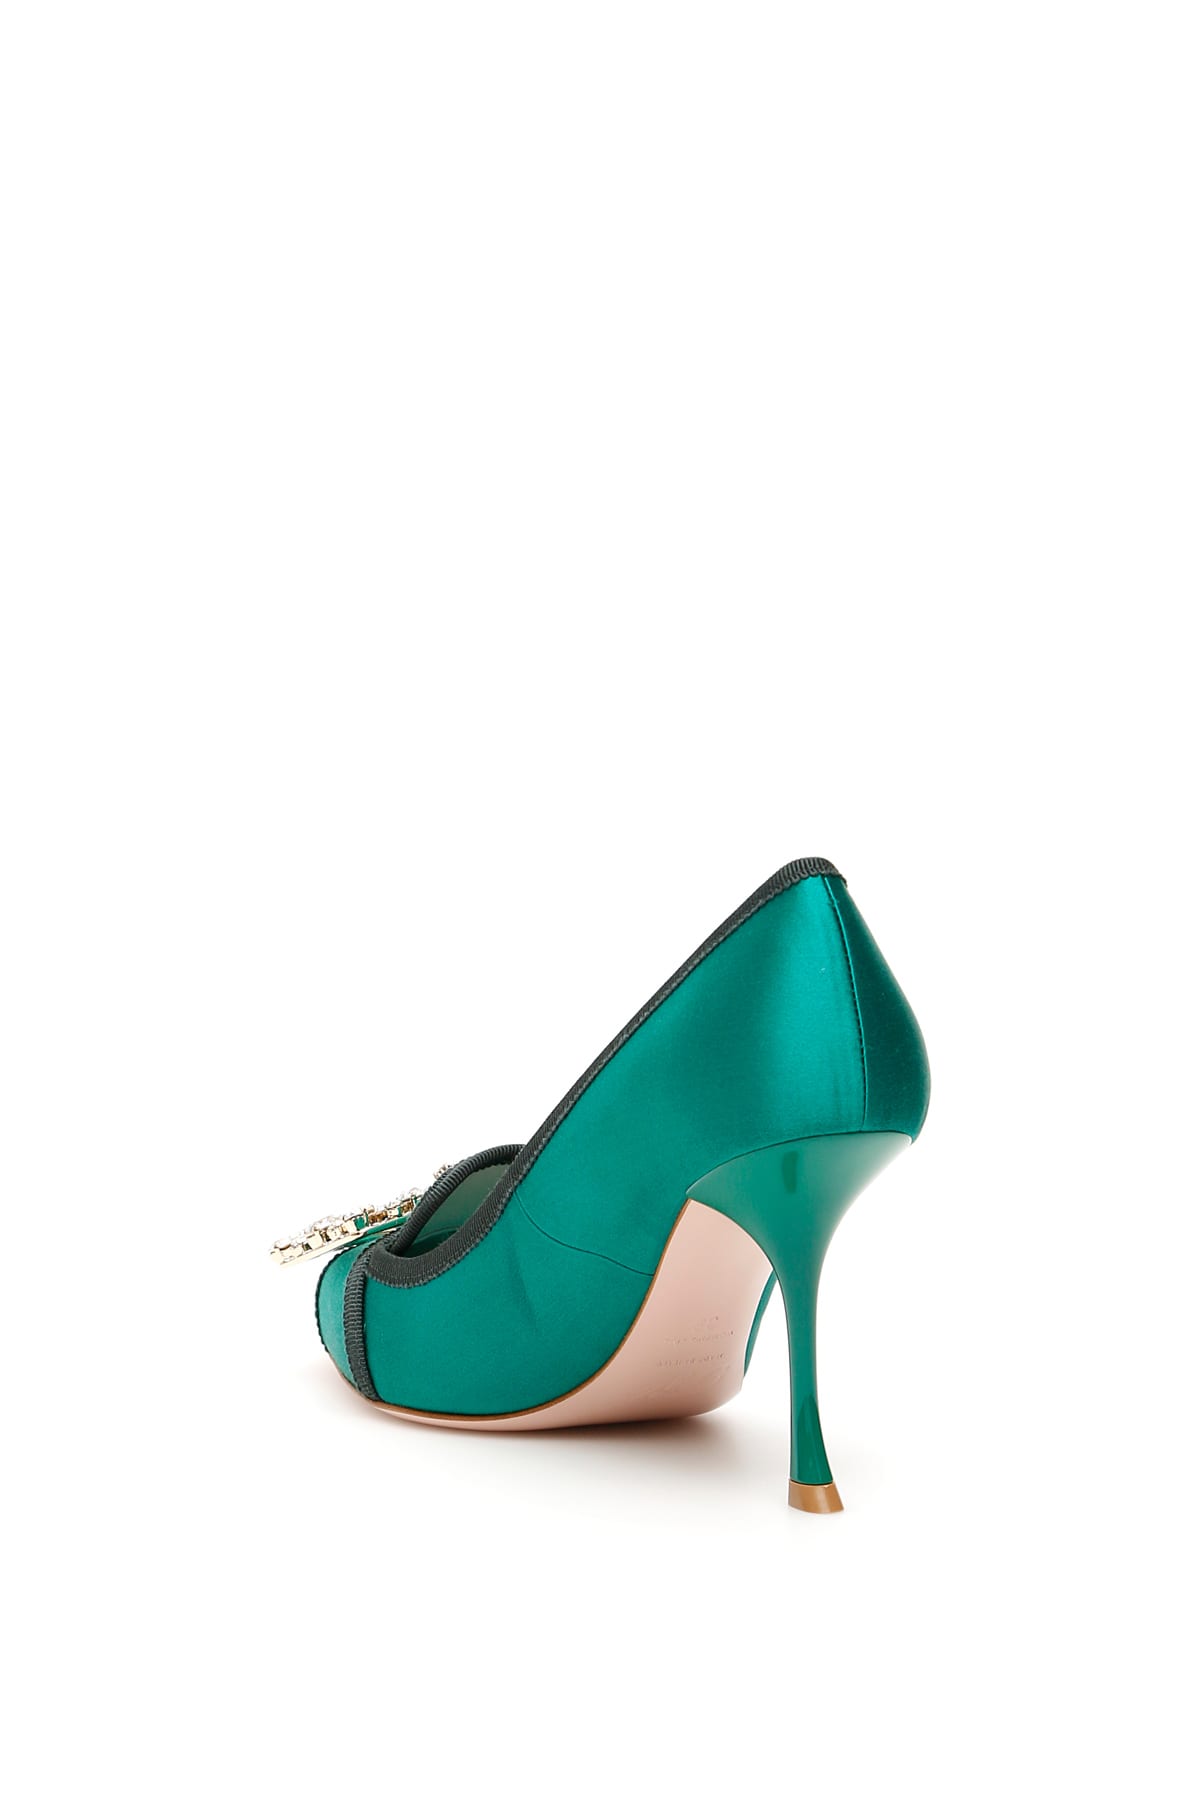 roger vivier green shoes